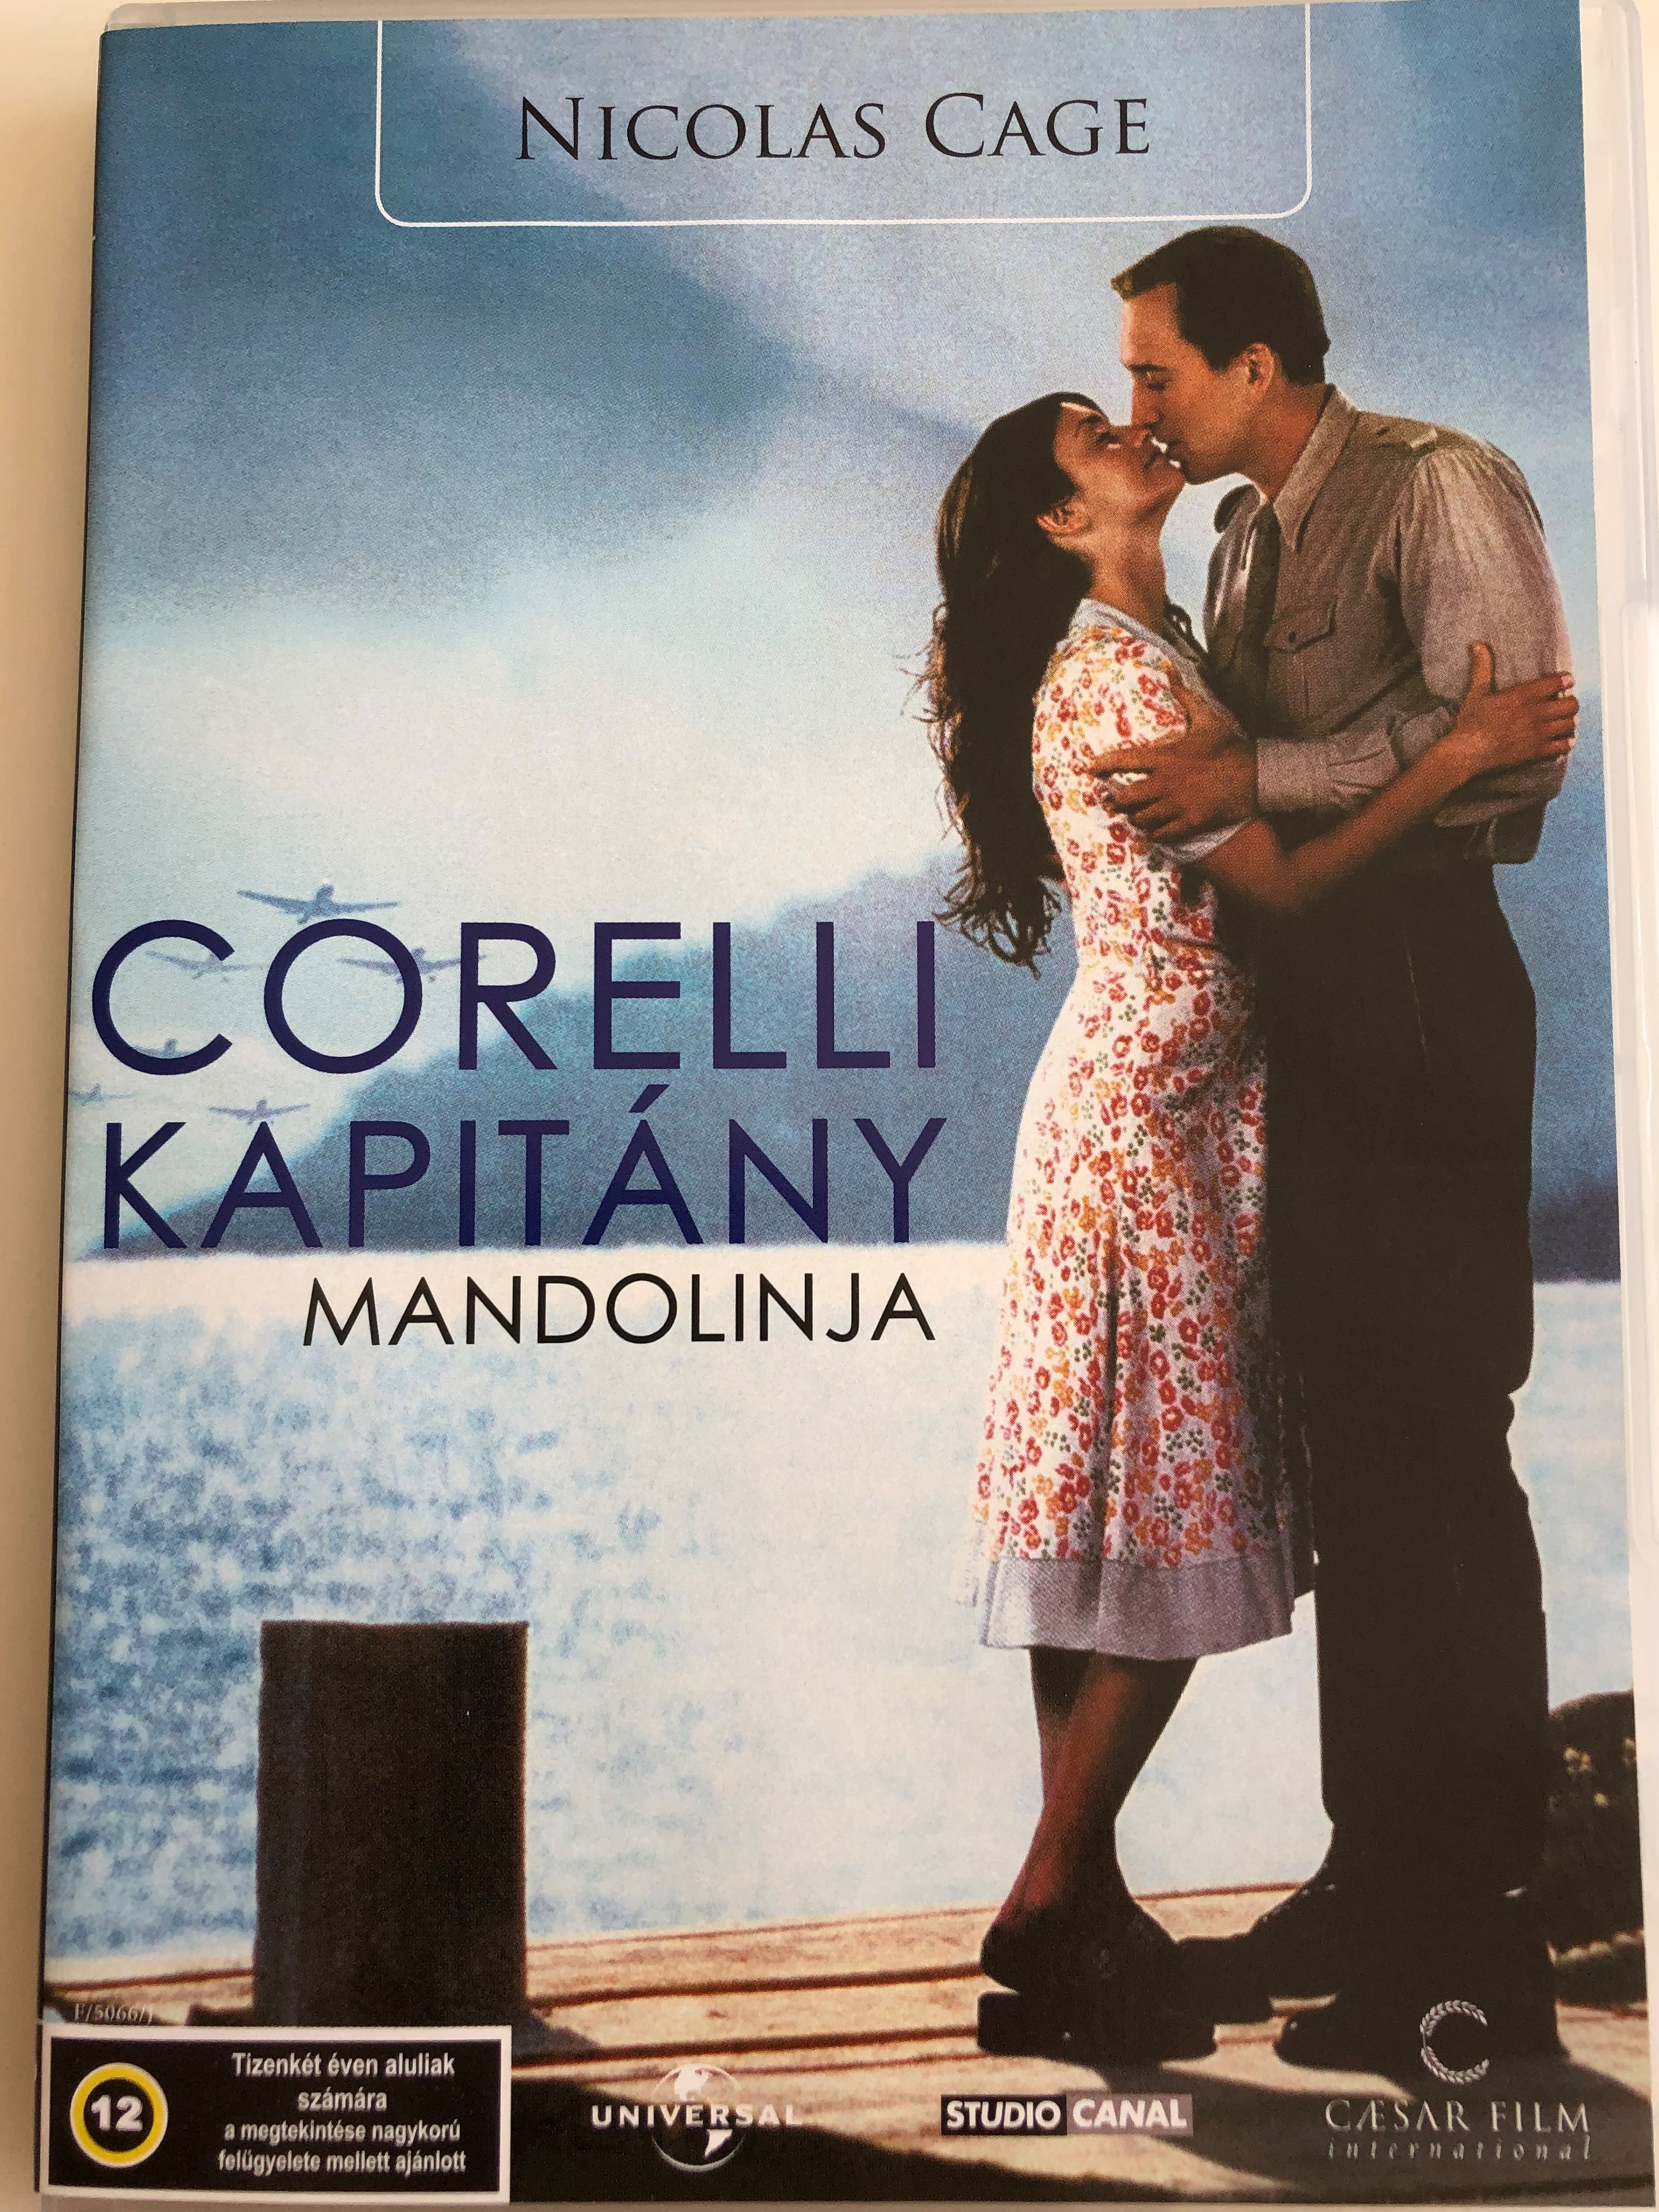 captain-corelli-s-mandolin-dvd-2001-corelli-kapit-ny-mandolinja-directed-by-john-madden-starring-penelope-cruz-nicolas-cage-1-.jpg